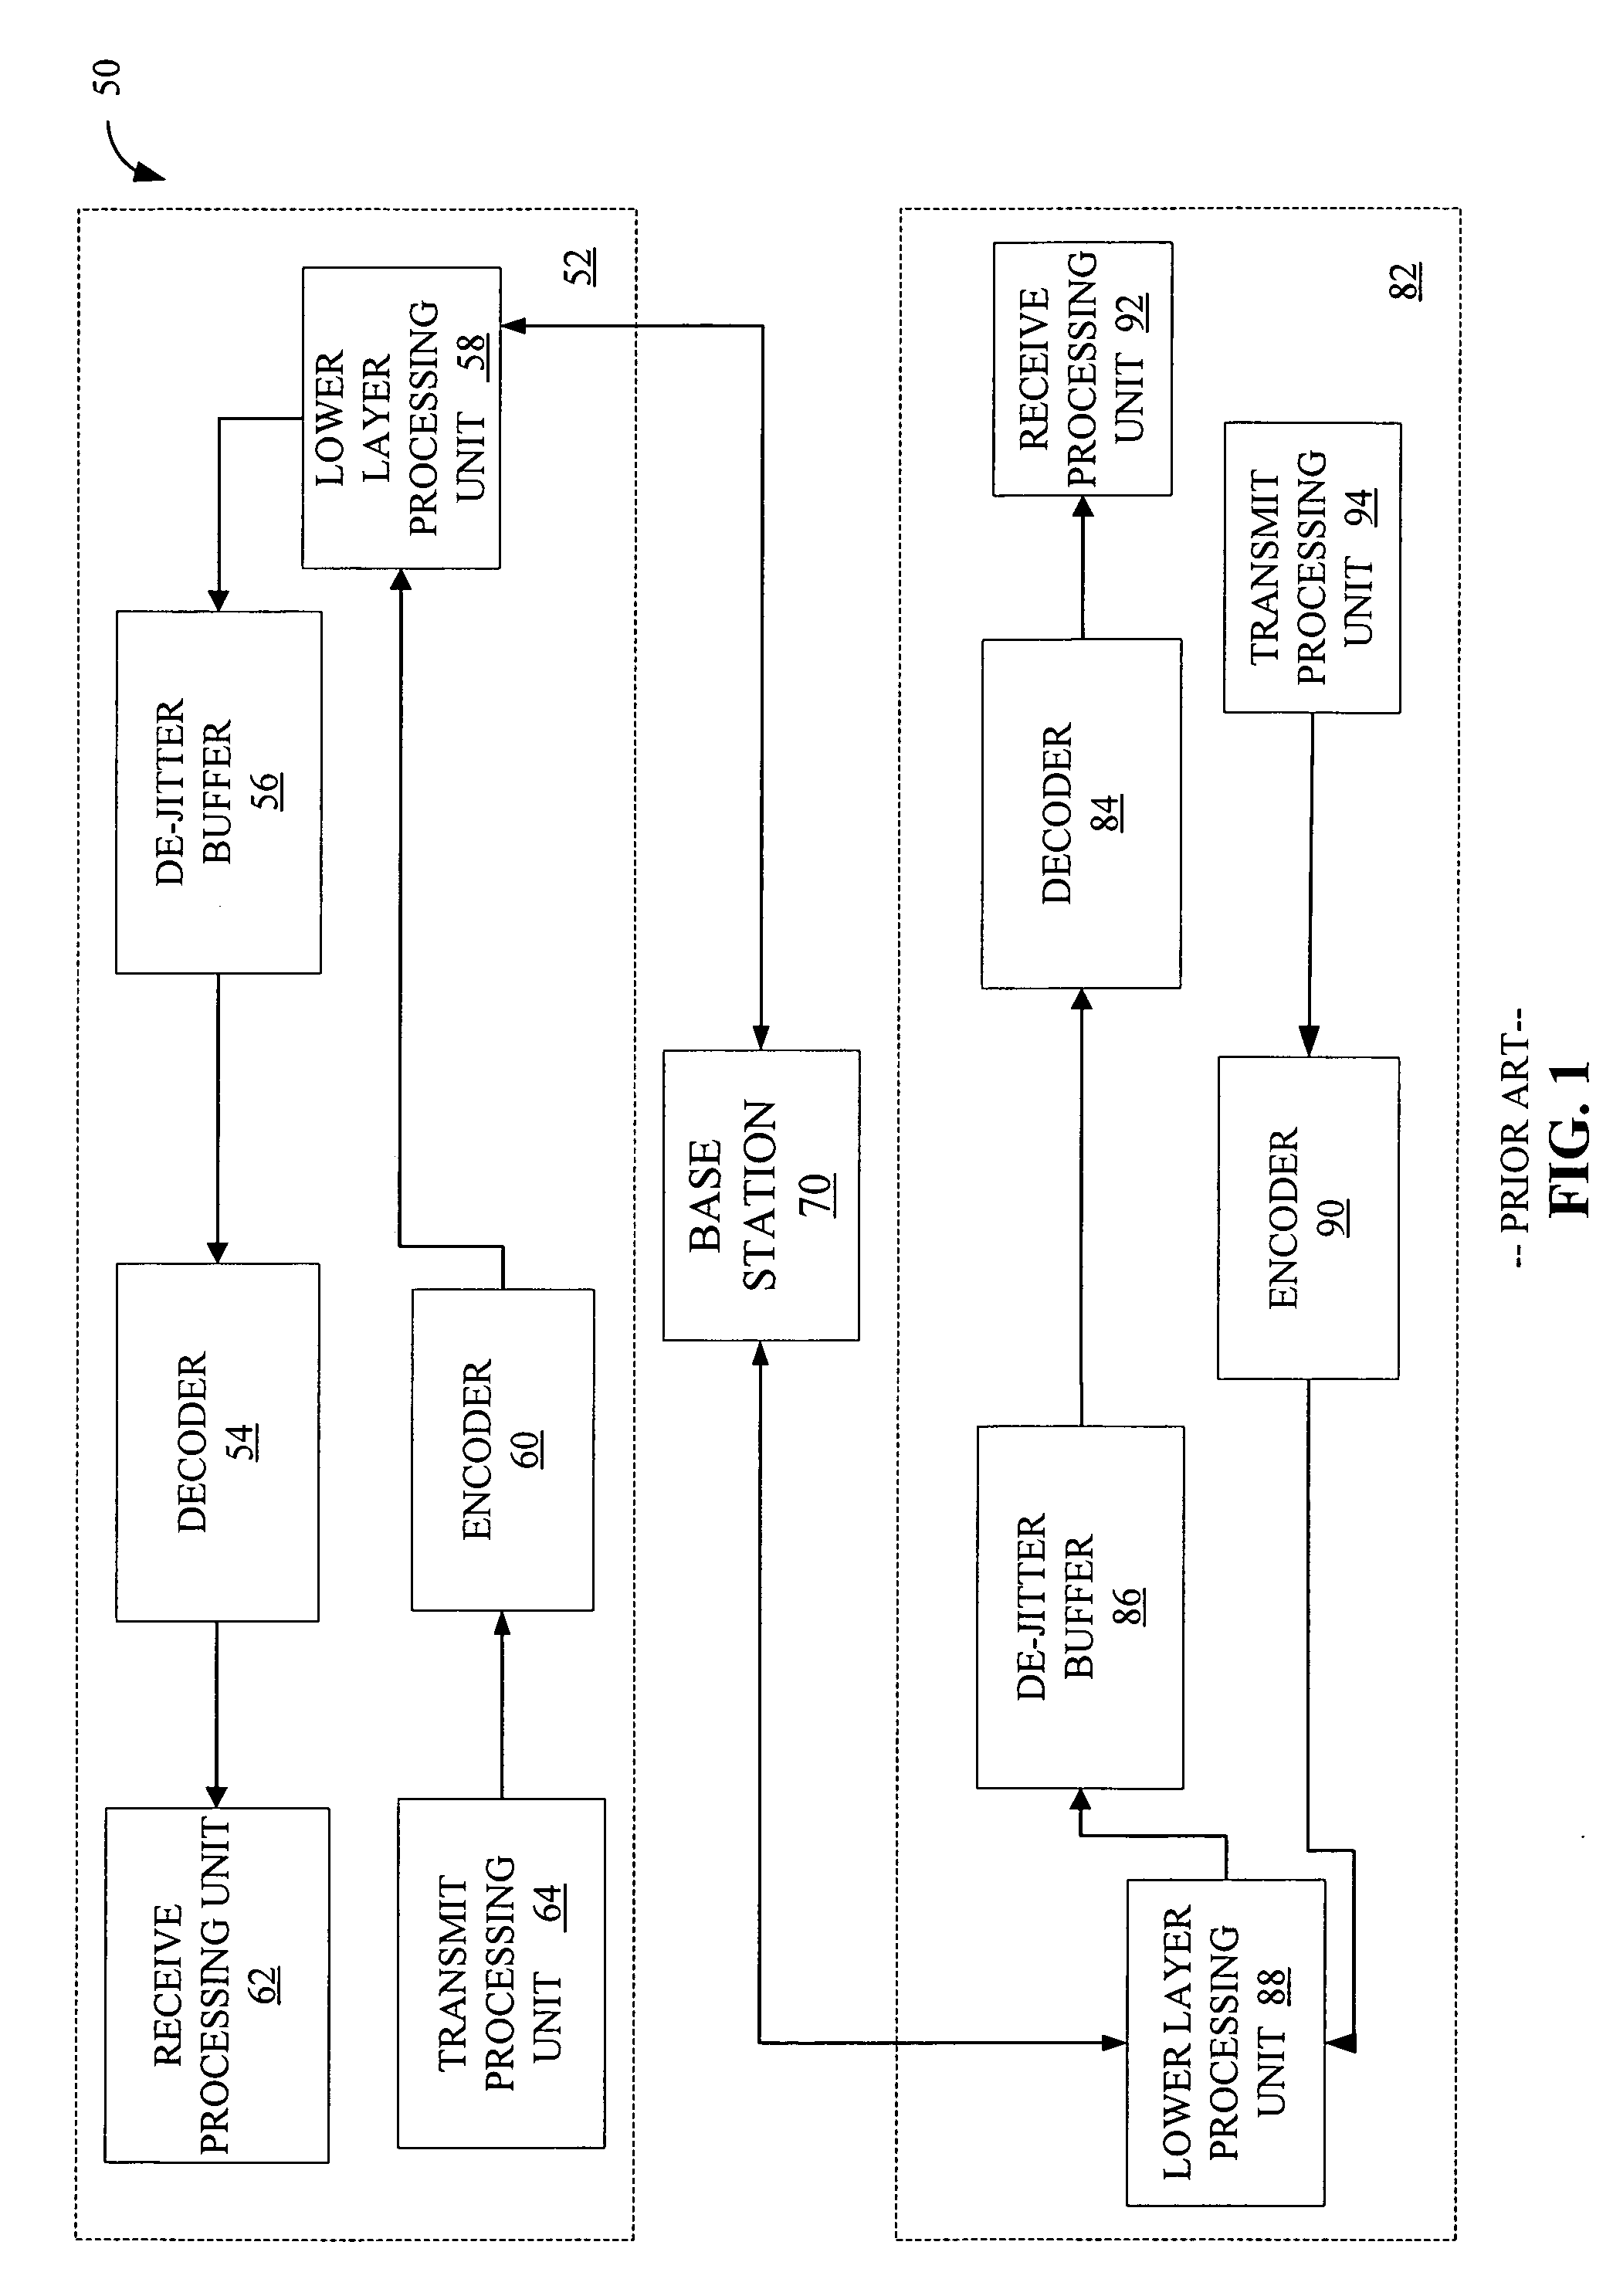 Method and apparatus for an adaptive de-jitter buffer